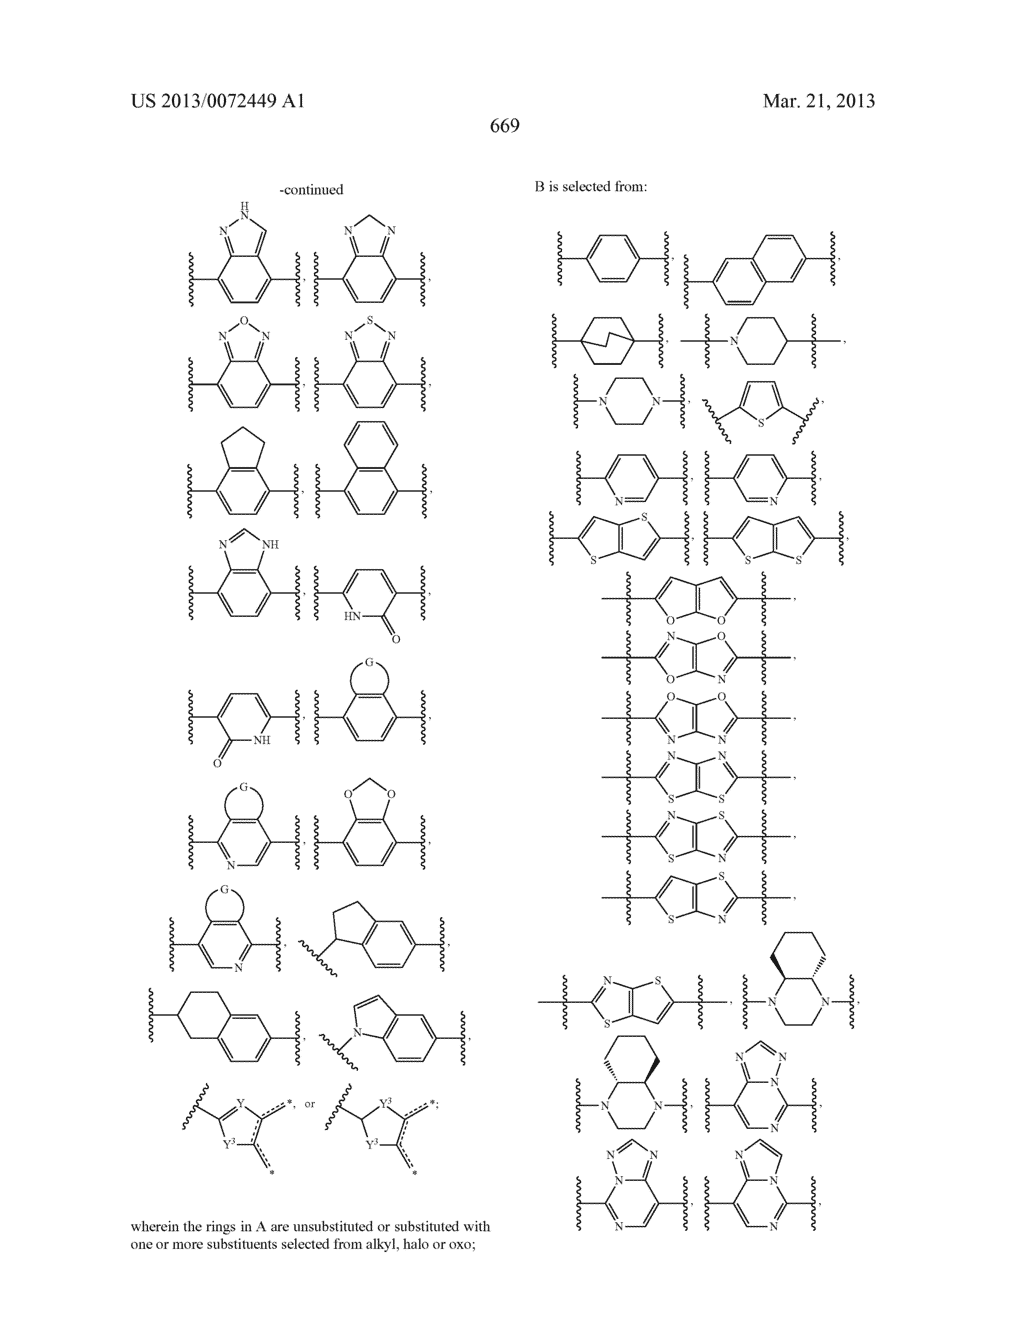 LYSOPHOSPHATIDIC ACID RECEPTOR ANTAGONISTS - diagram, schematic, and image 670